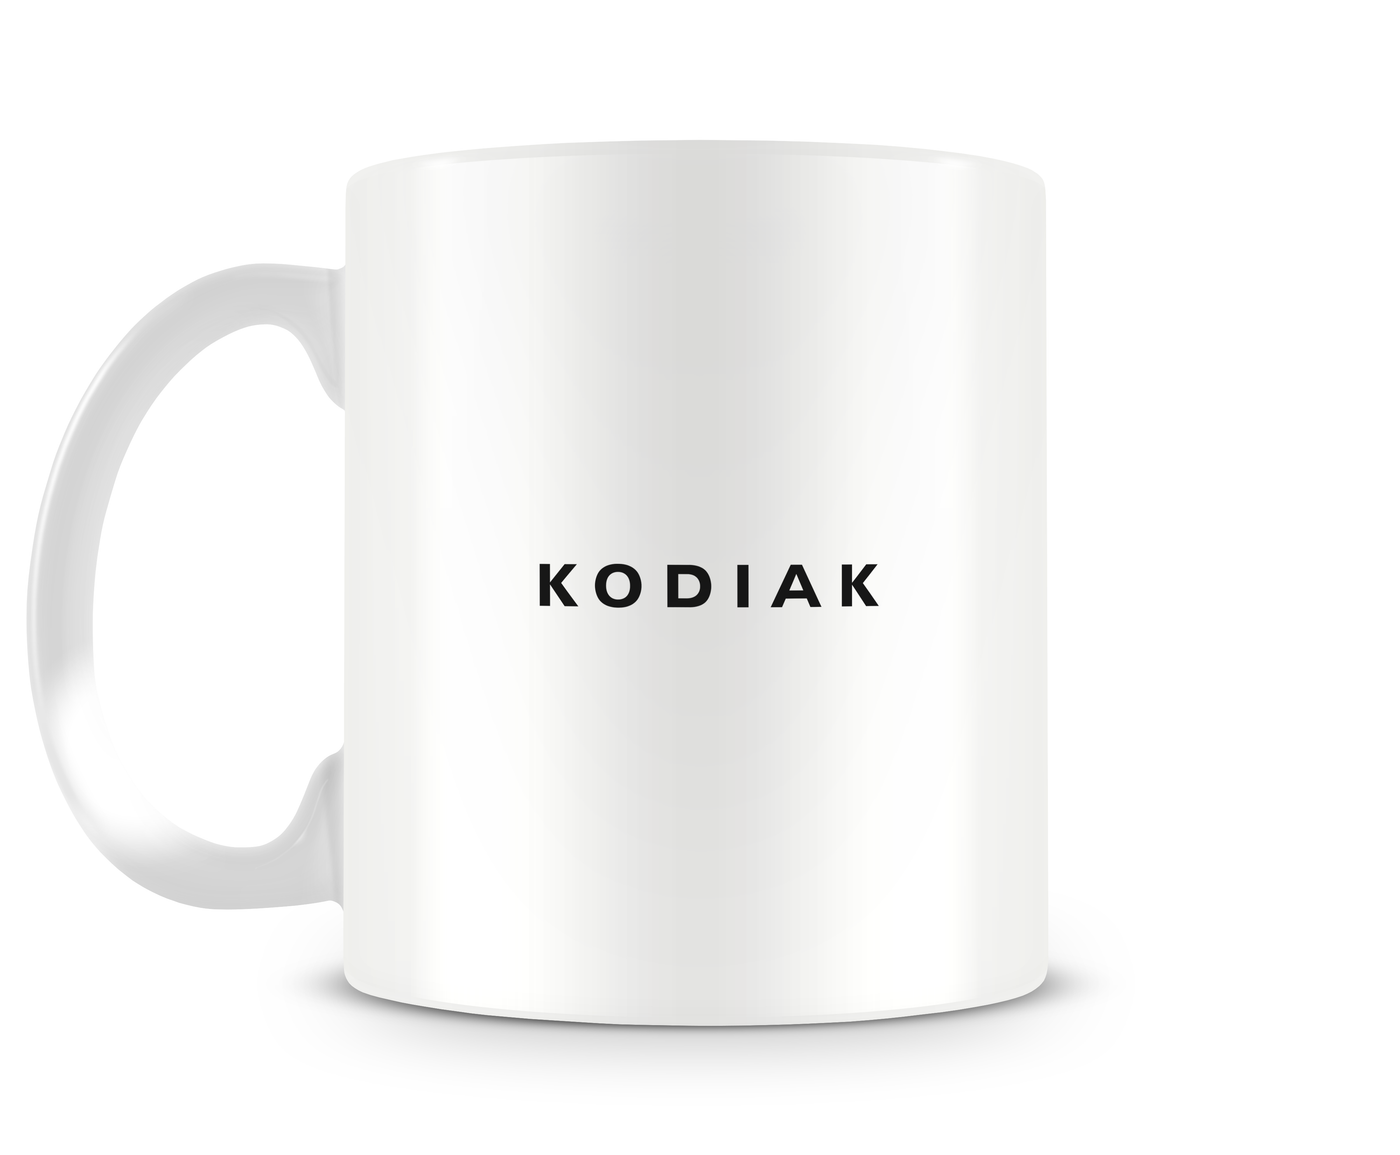 Kodiak 100 Mug - Aircraft Mugs